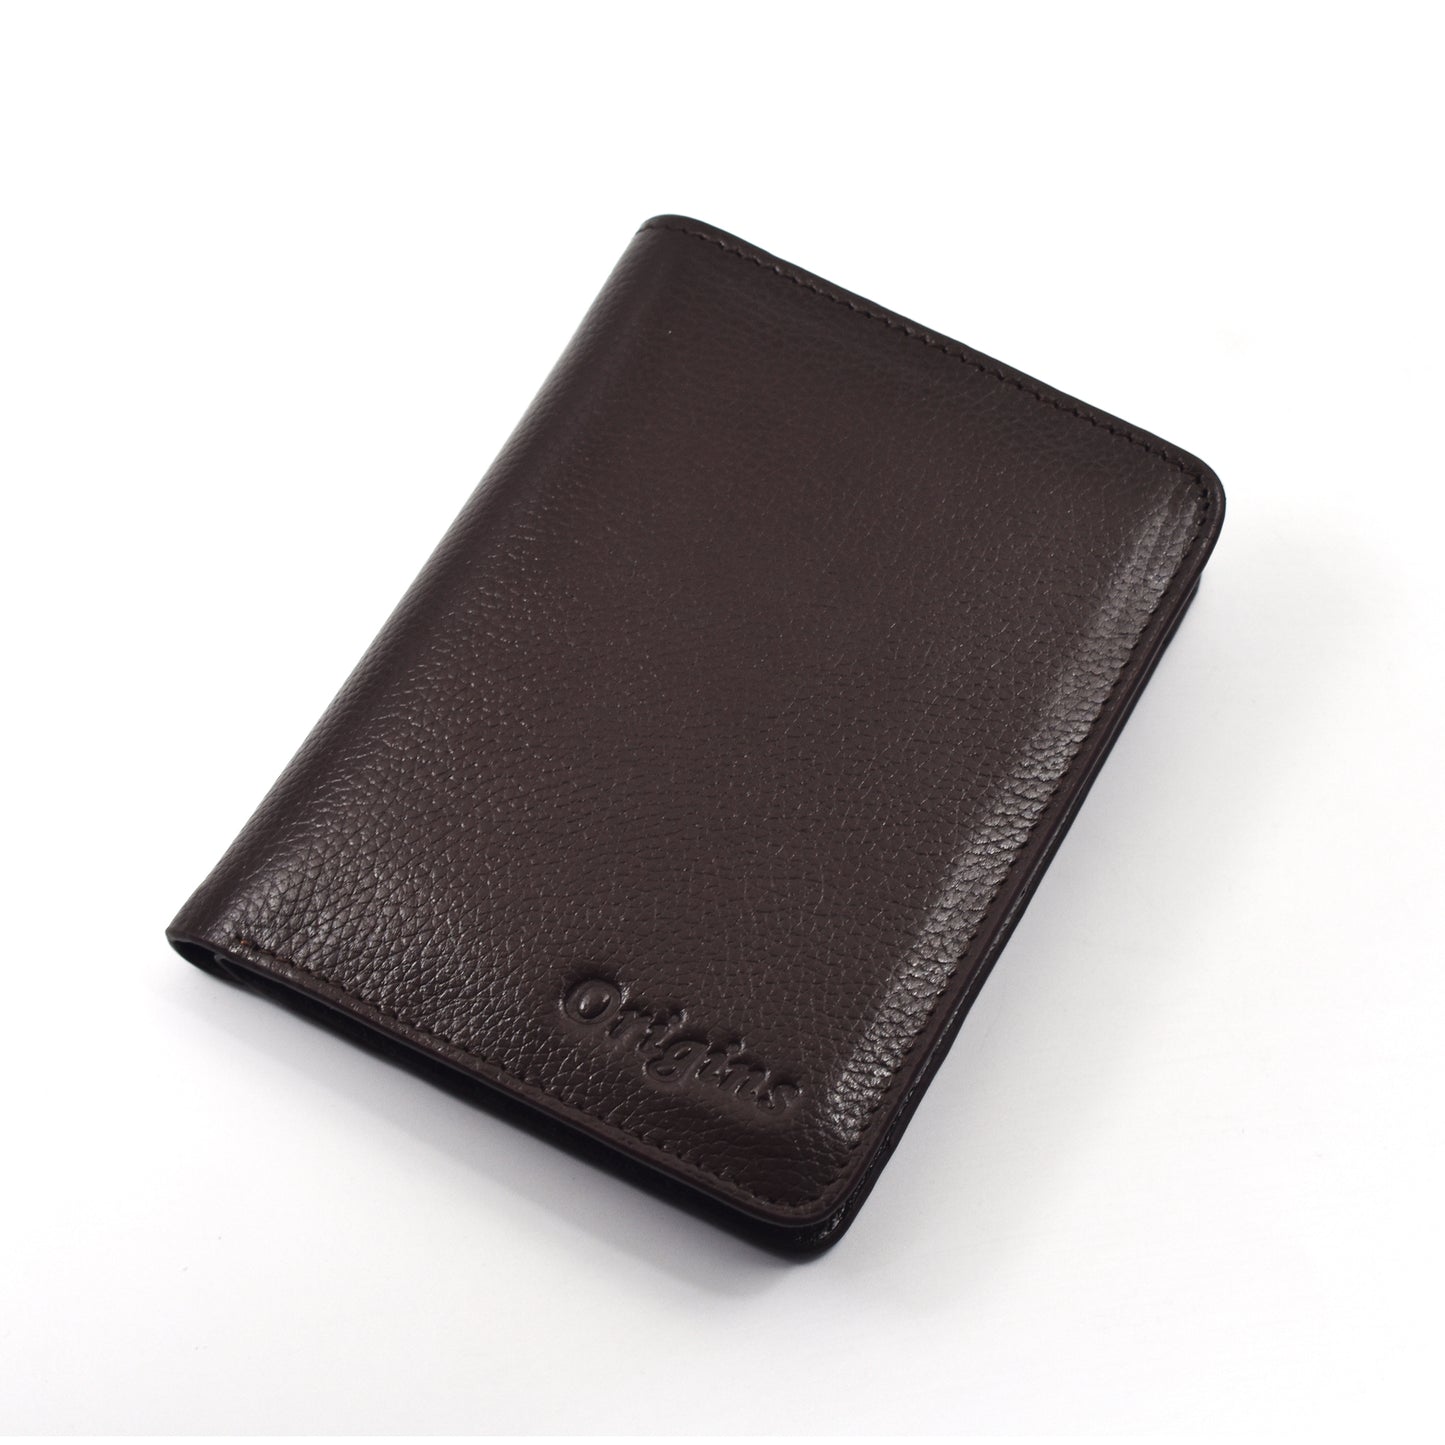 Pocket Size Wallet | Original Leather | Premium Quality | ORGN Wallet 34